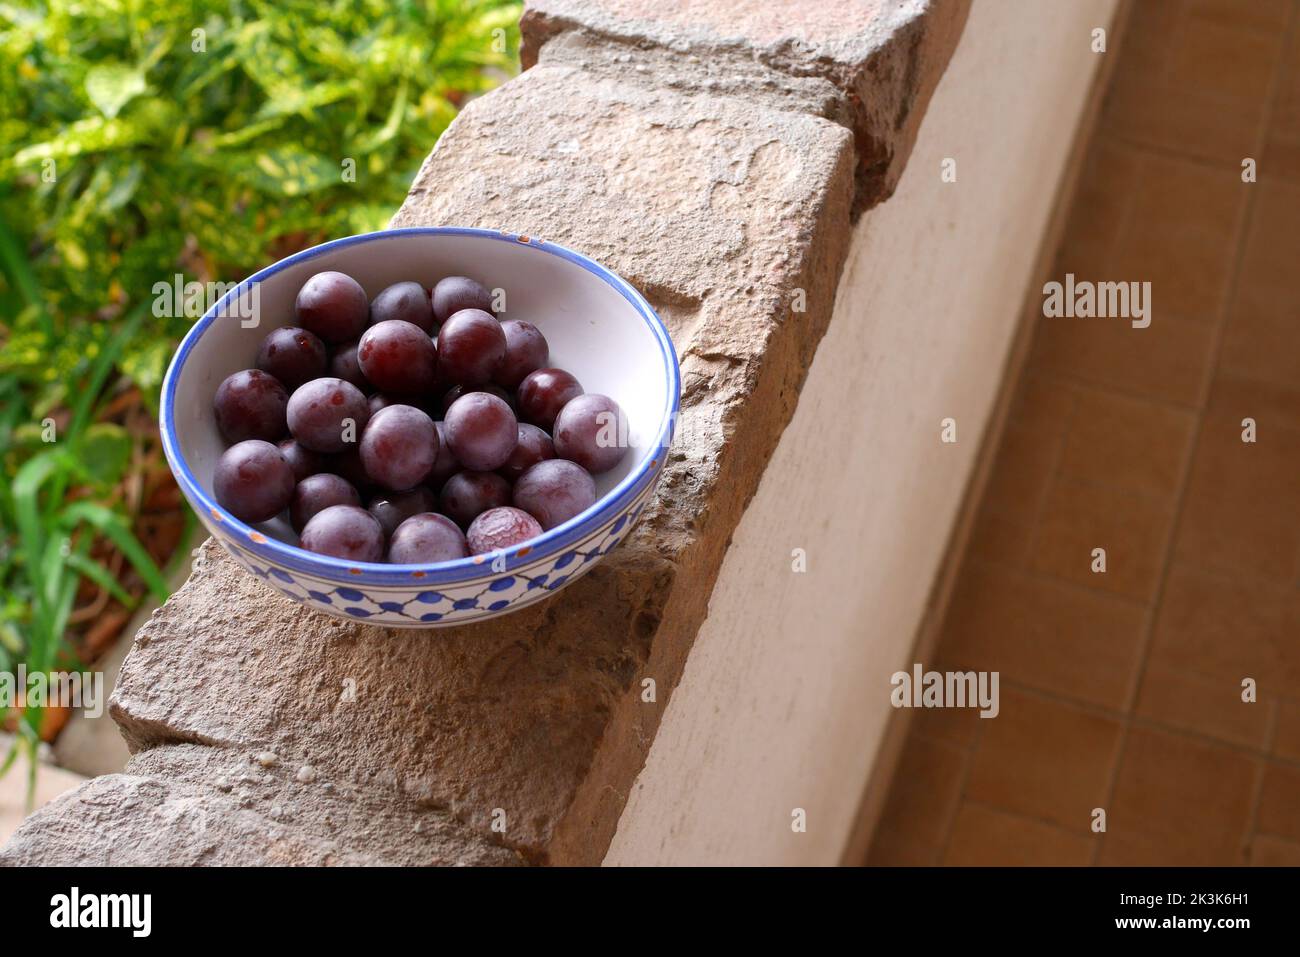 Cherry plum, prunus cerasifera, in a bowl, on a wall, Hungary Stock Photo